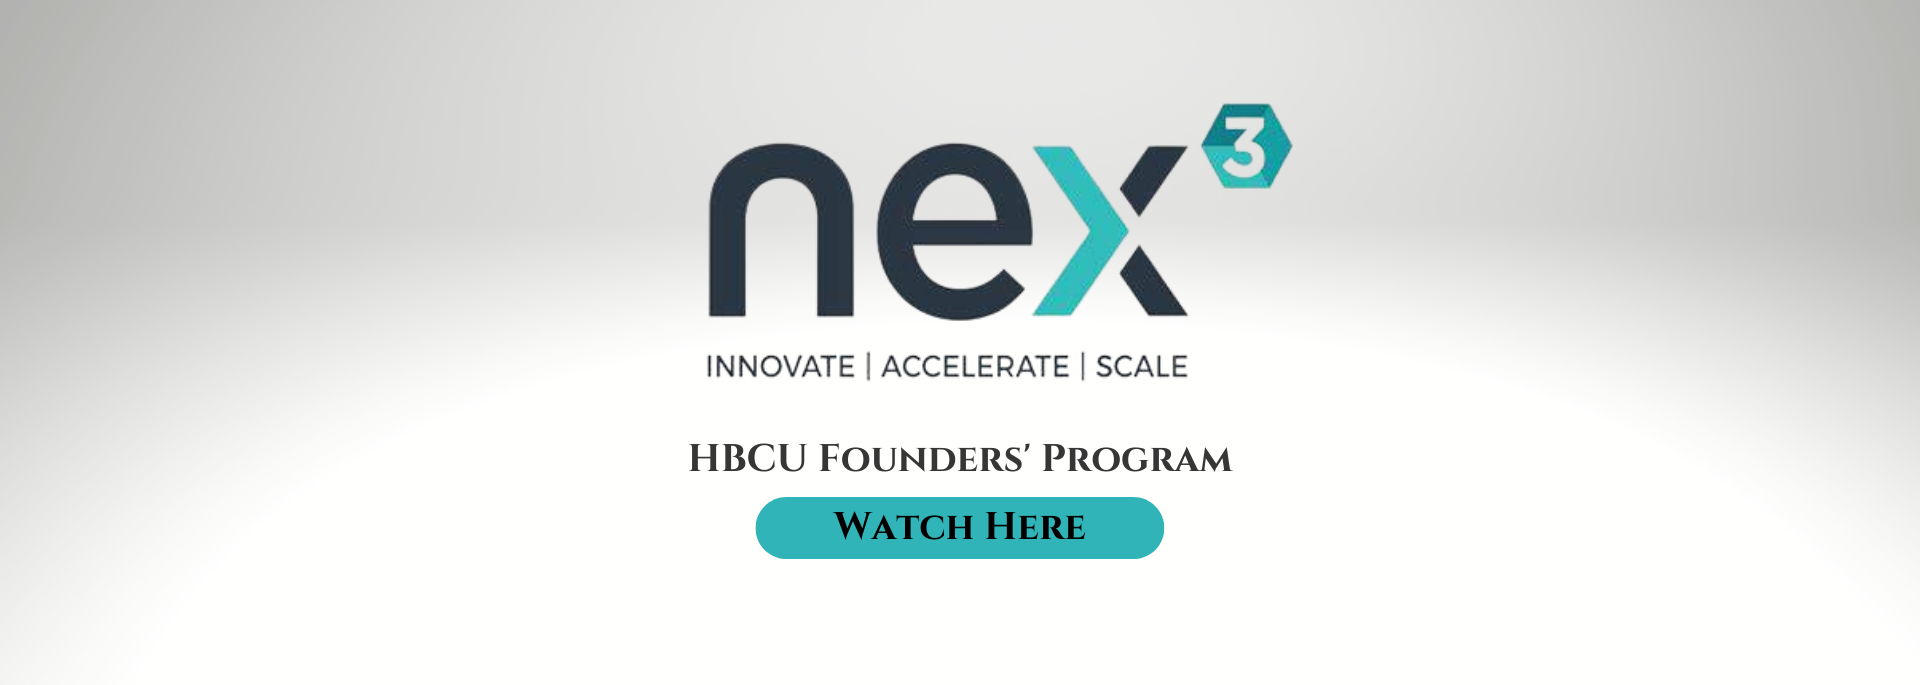 Nex Cubed - HBCU Founders' Program